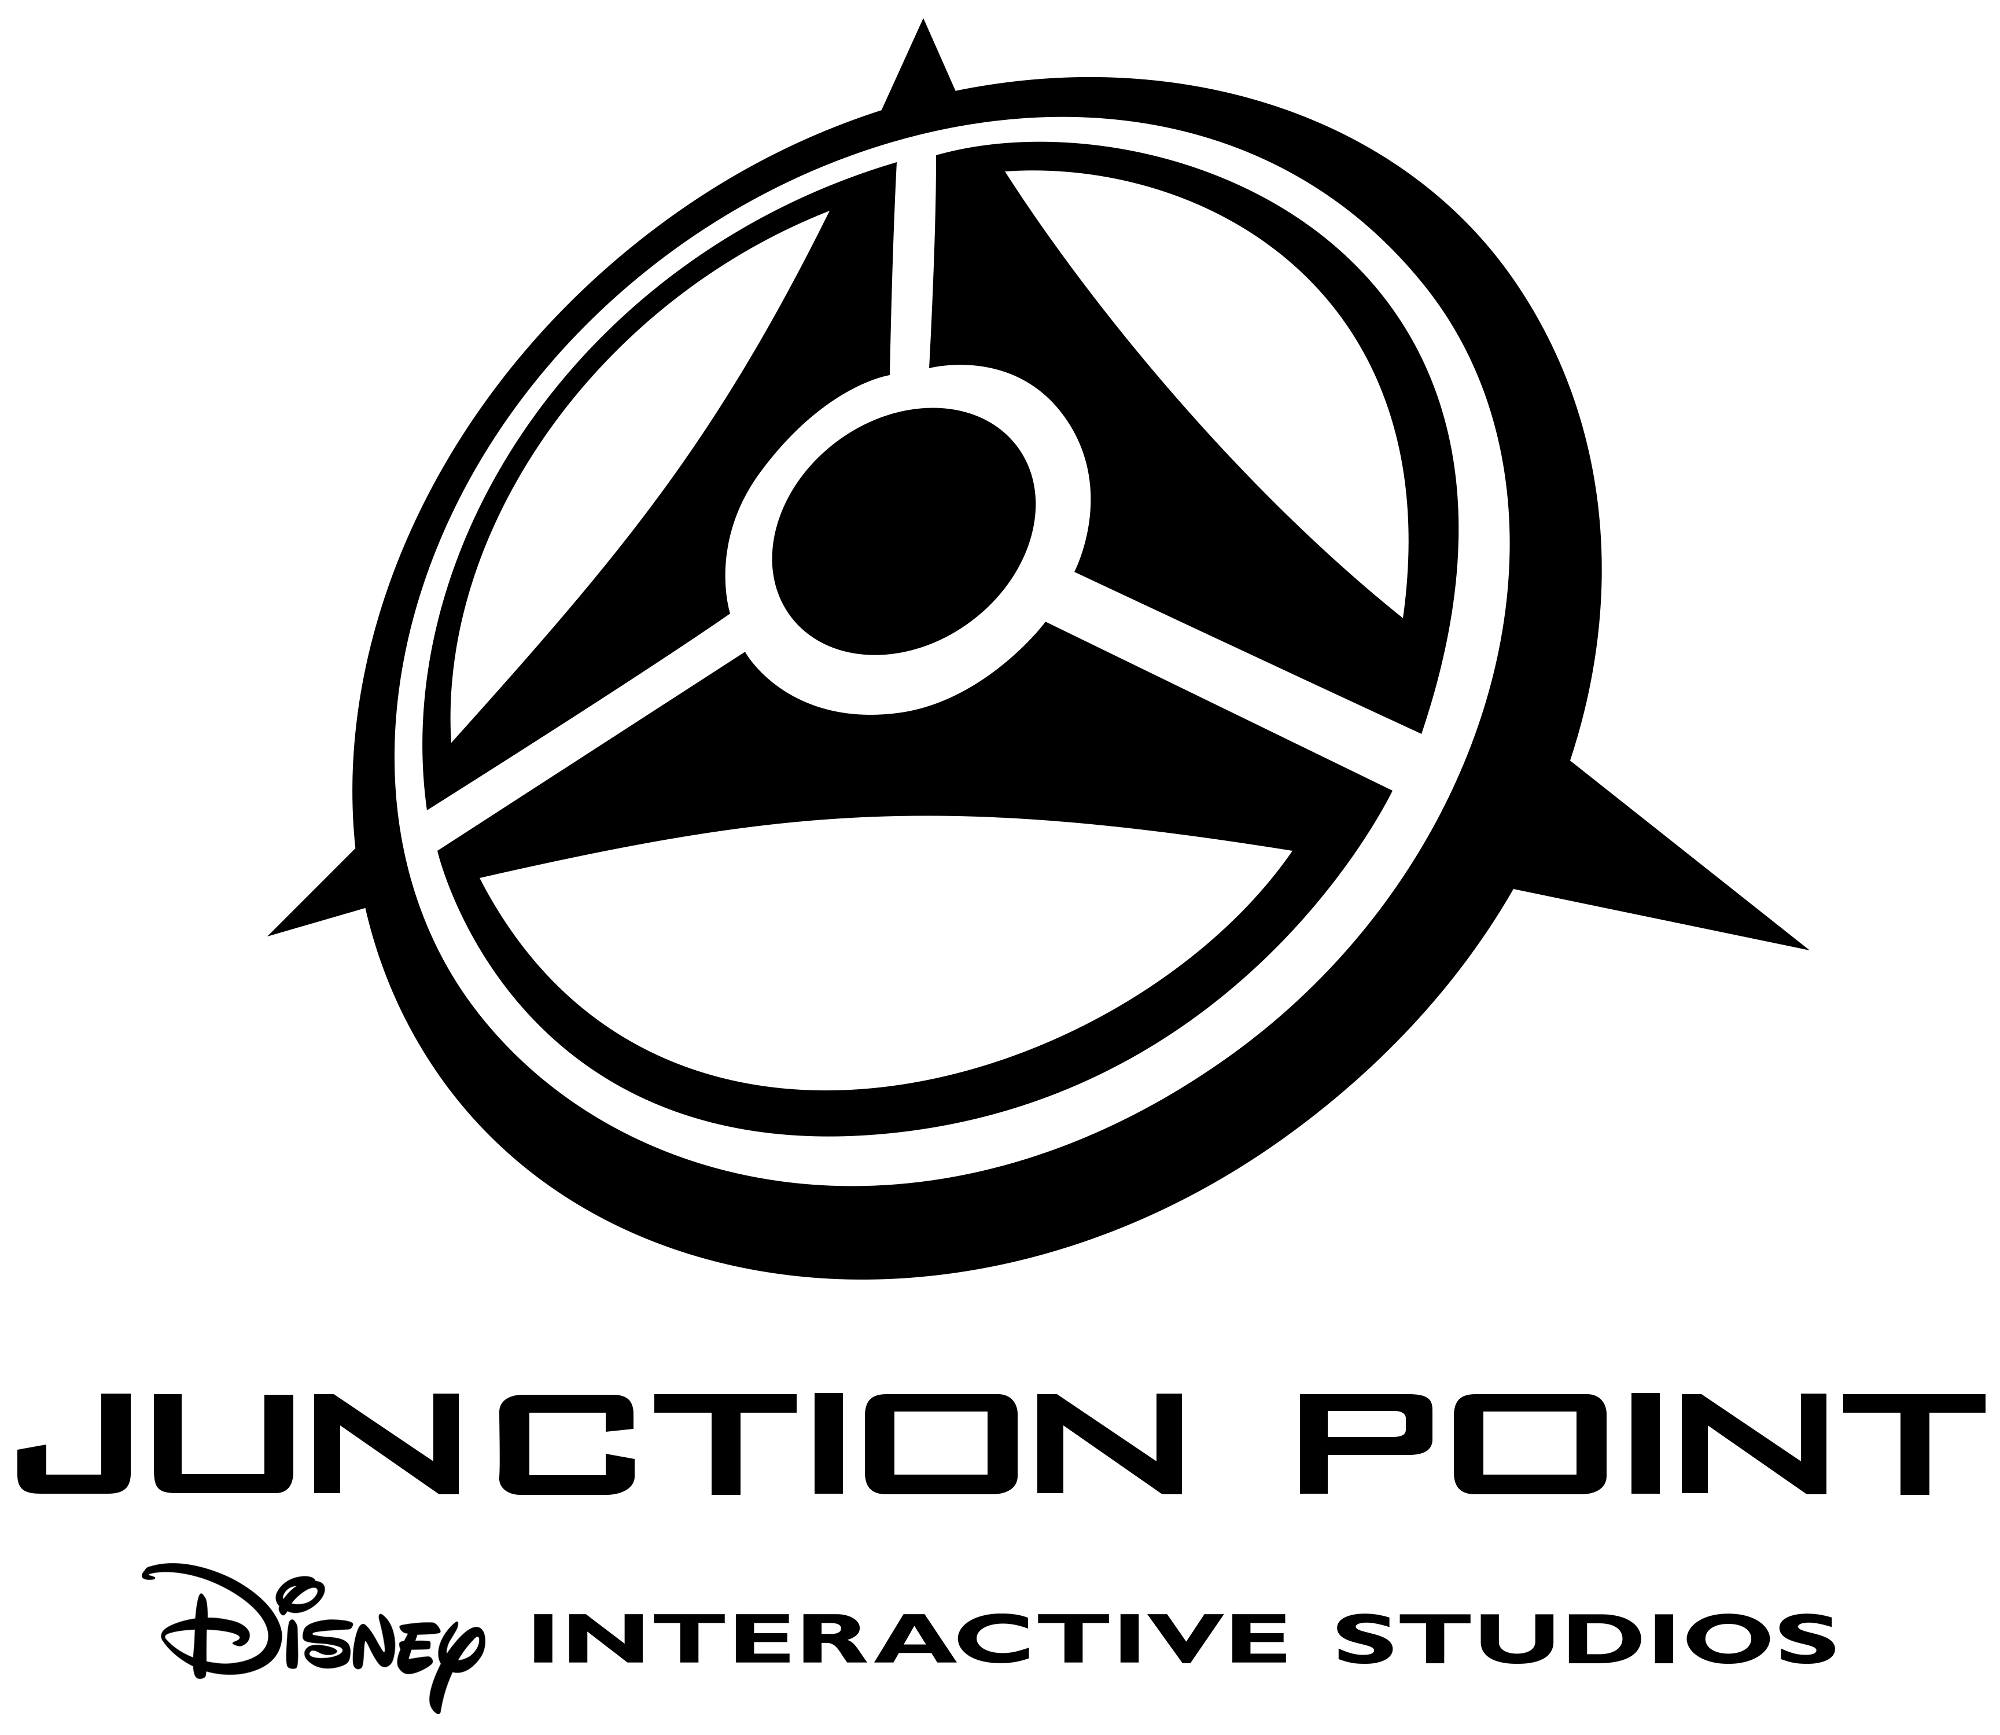 Disney Interactive Studios Logo - Category:Disney Interactive Studios | Logopedia | FANDOM powered ...